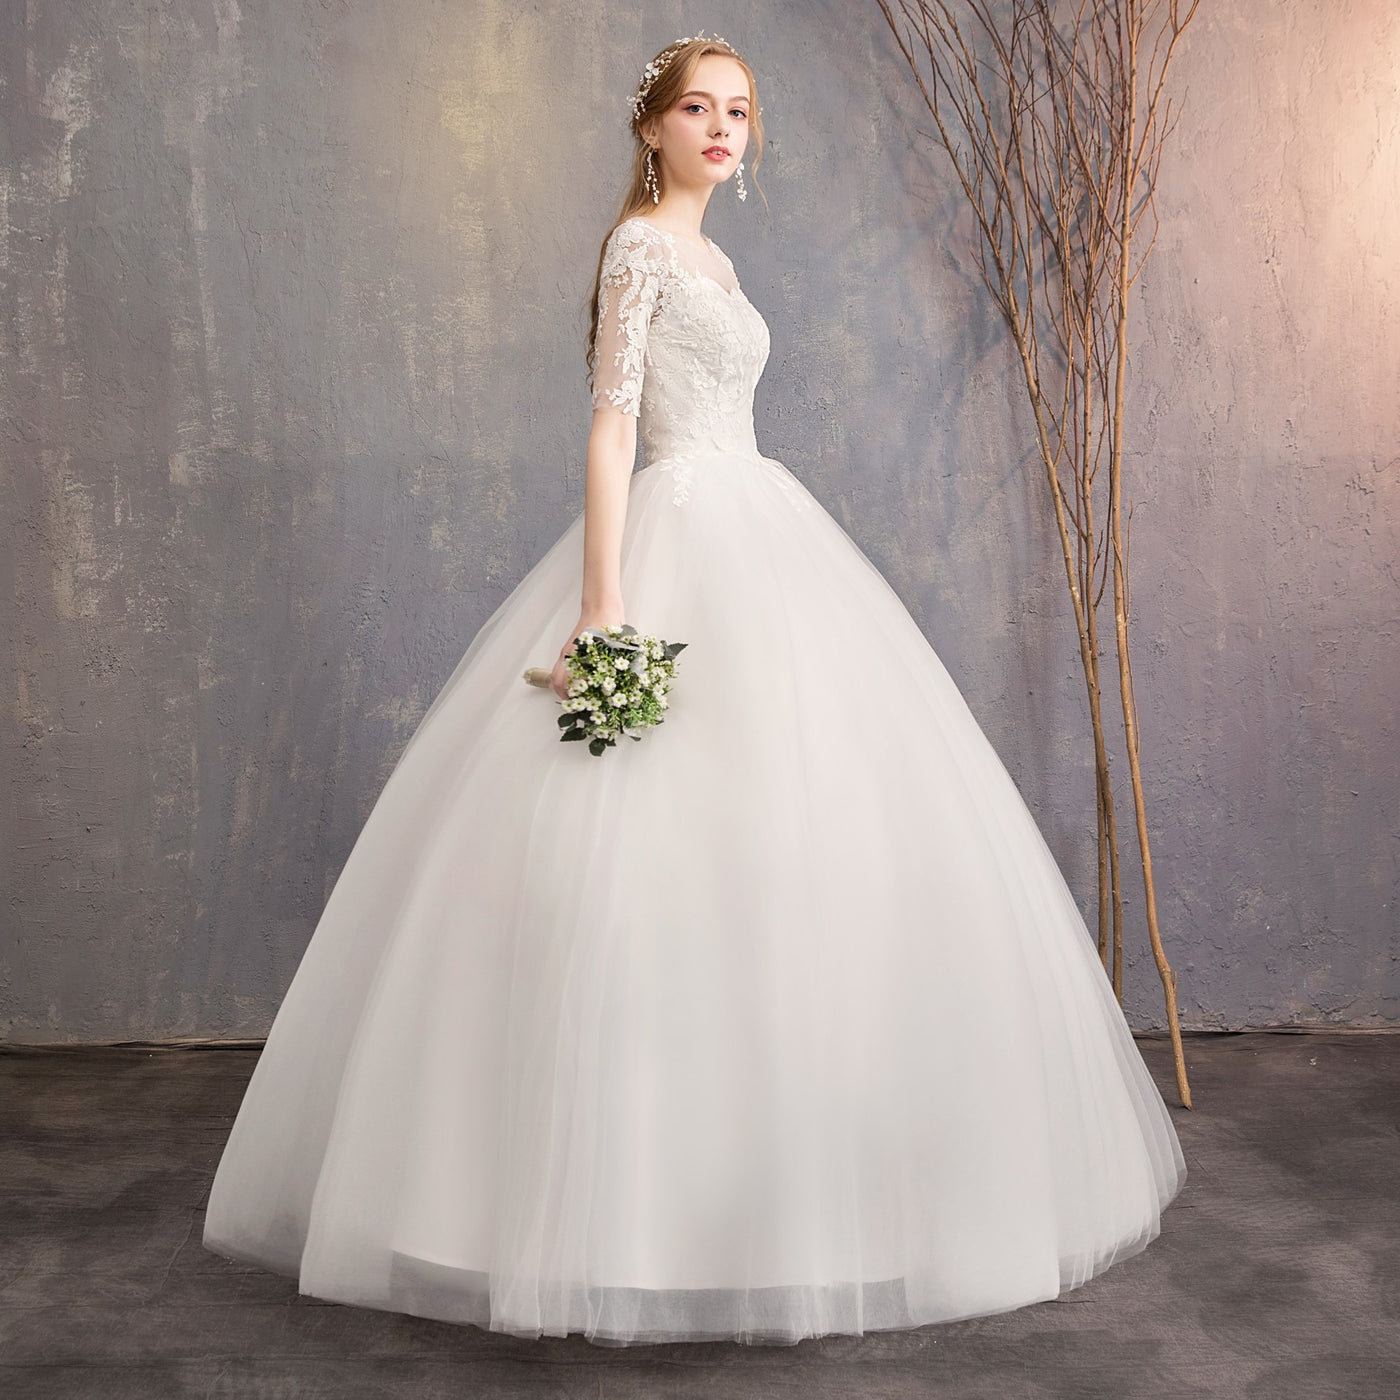 New Fashion Slim Fit Lace Mid Sleeve Plus Size Photo Studio Wedding Dress